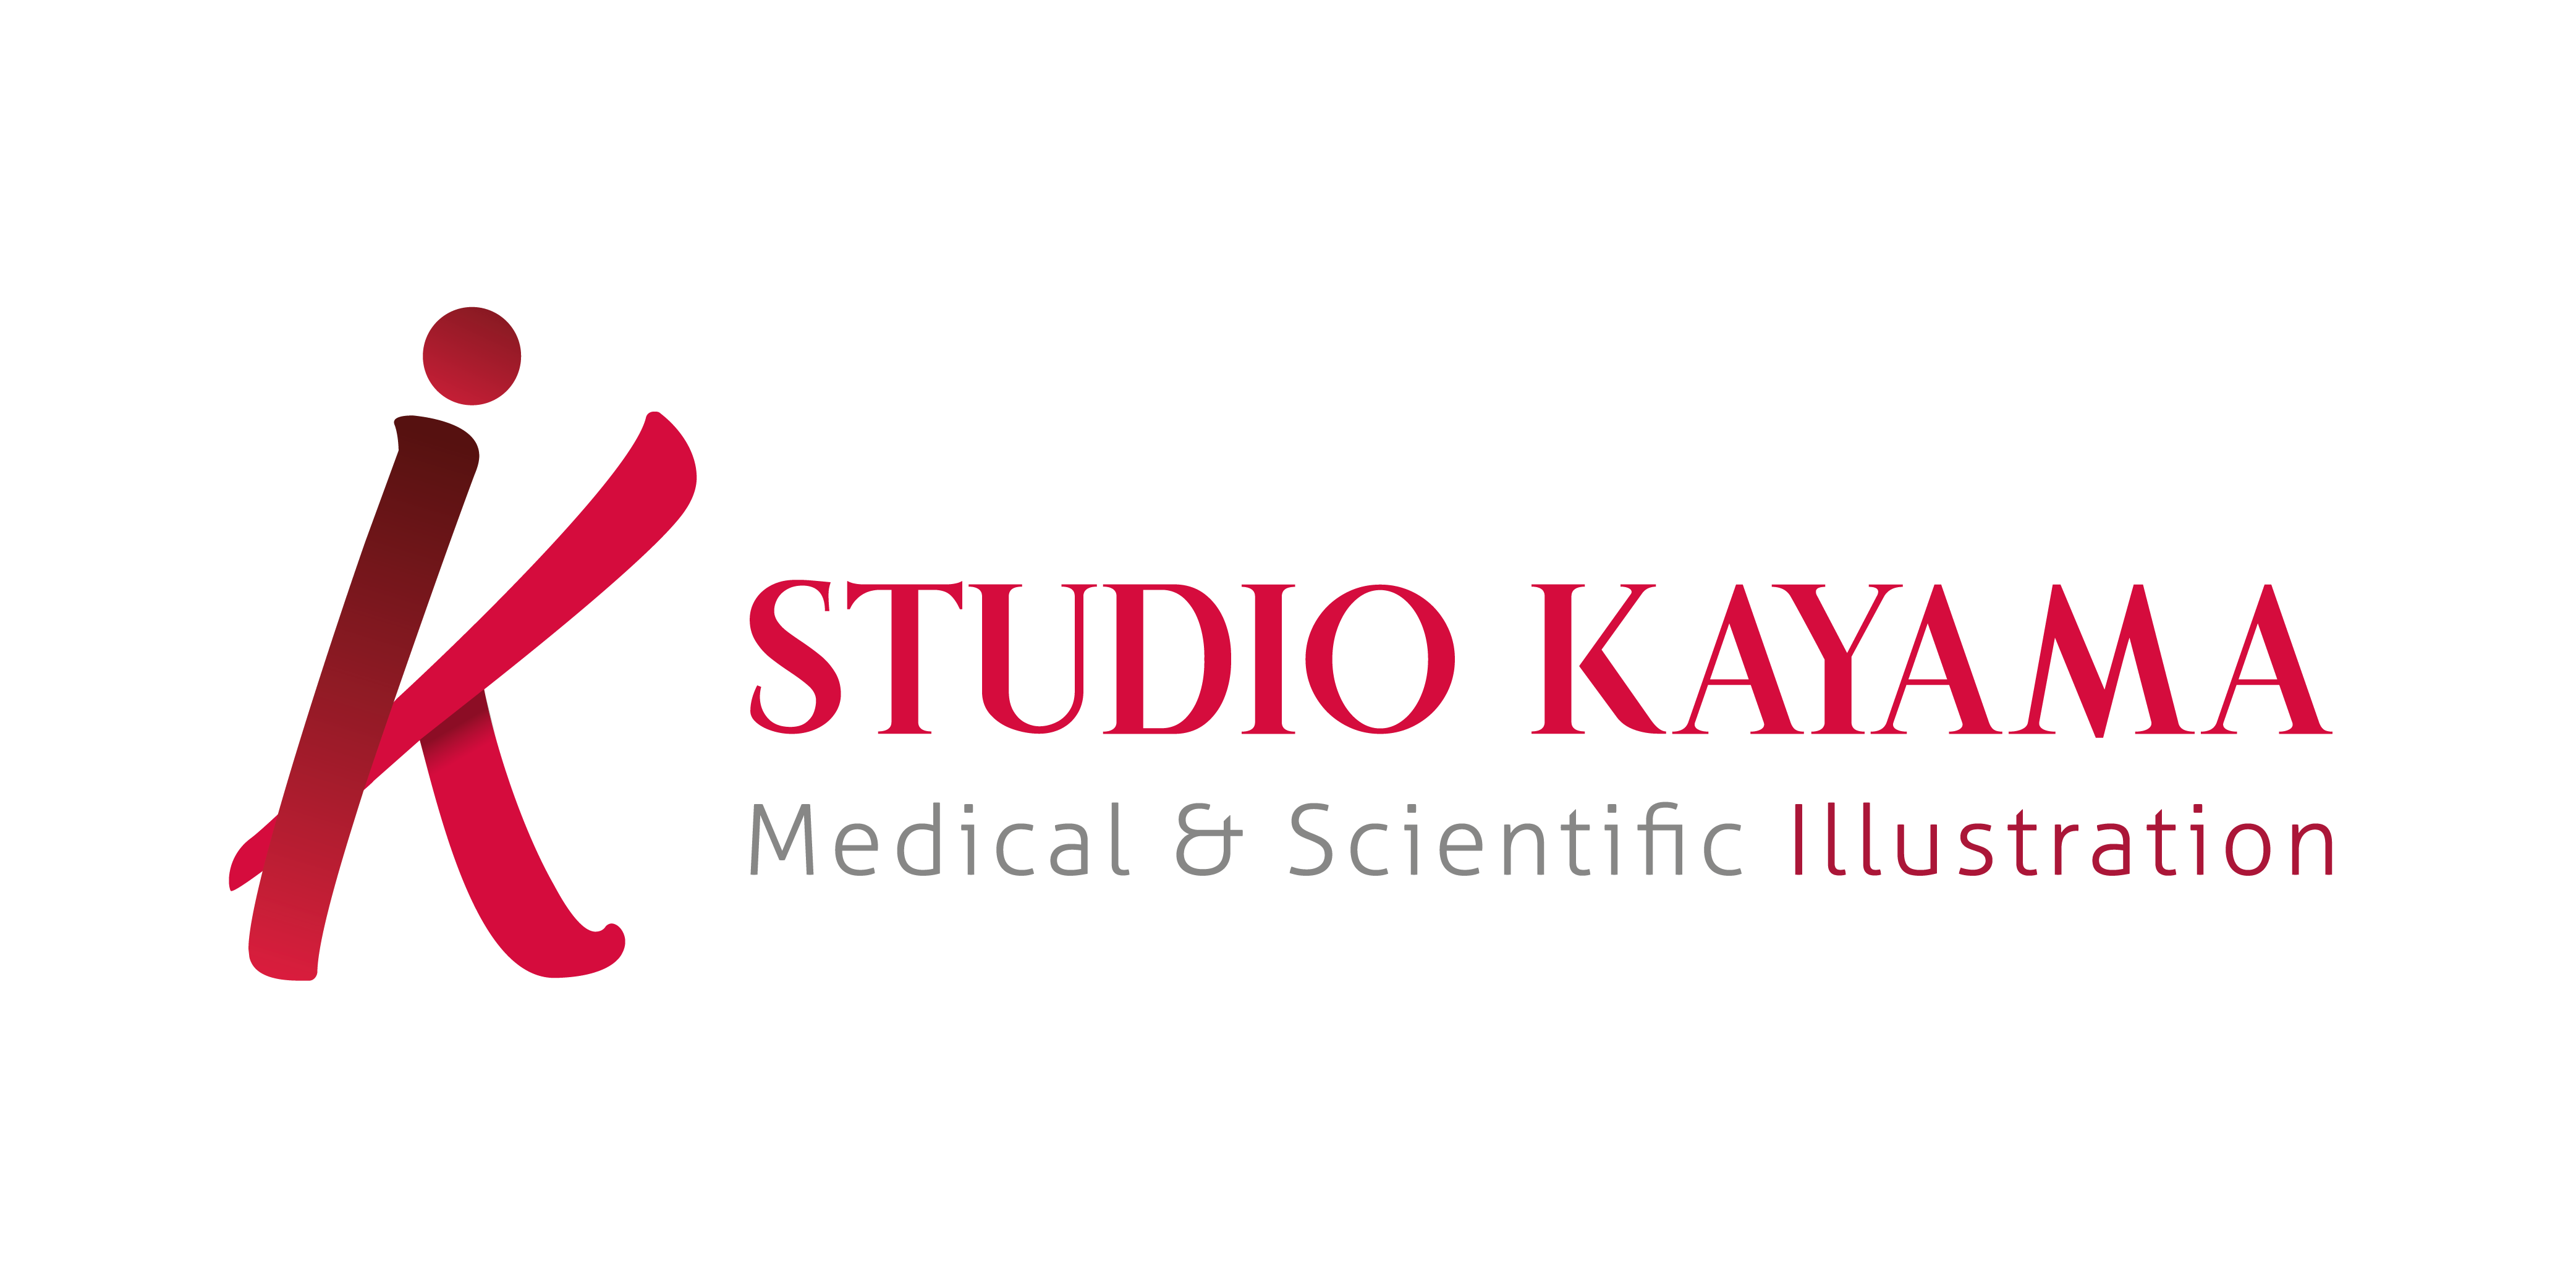 |Studio Kayama|